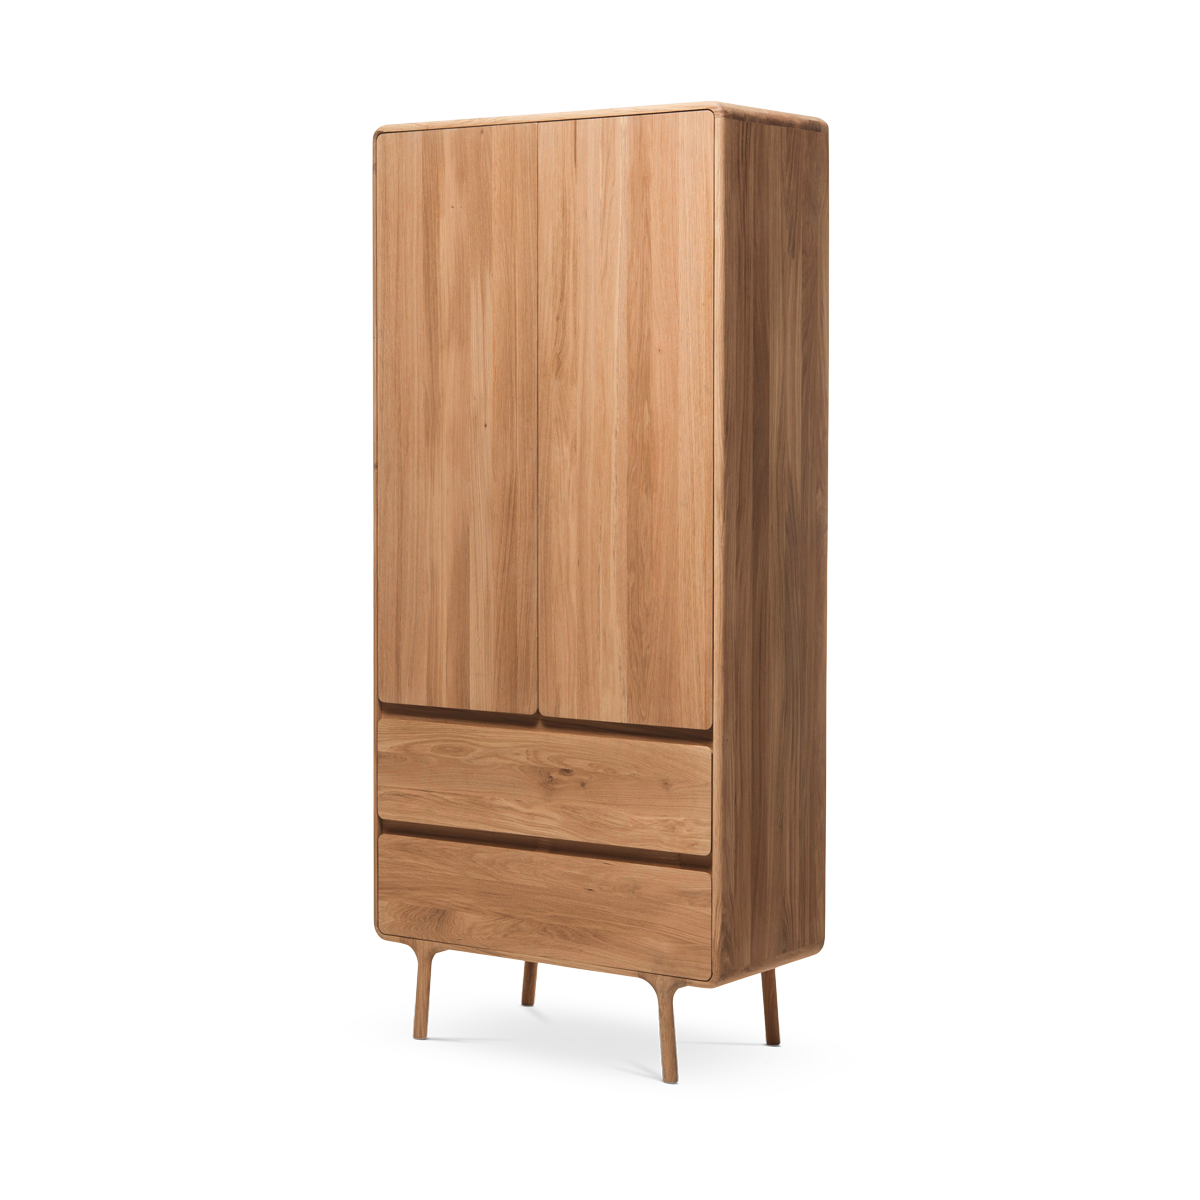 Fawn wardrobe houten kledingkast naturel - 200 x 90 cm